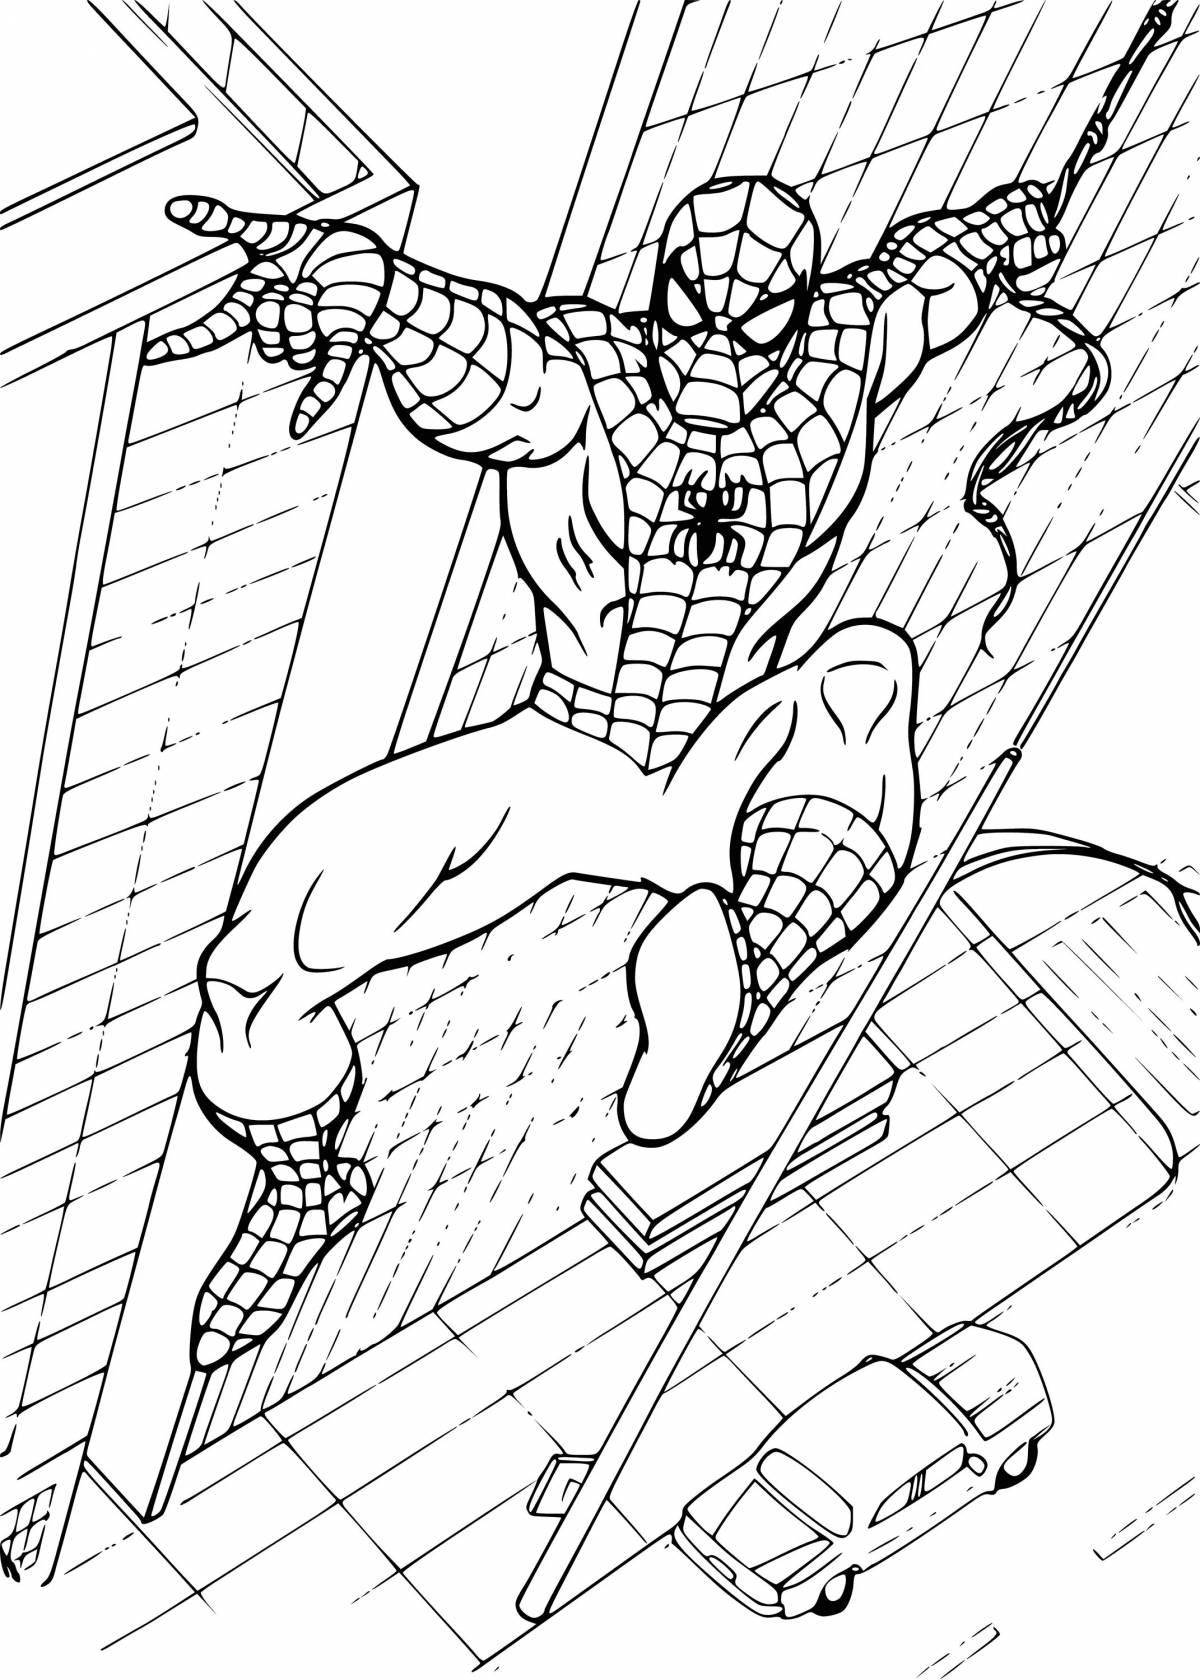 Spider-man bright cartoon coloring book